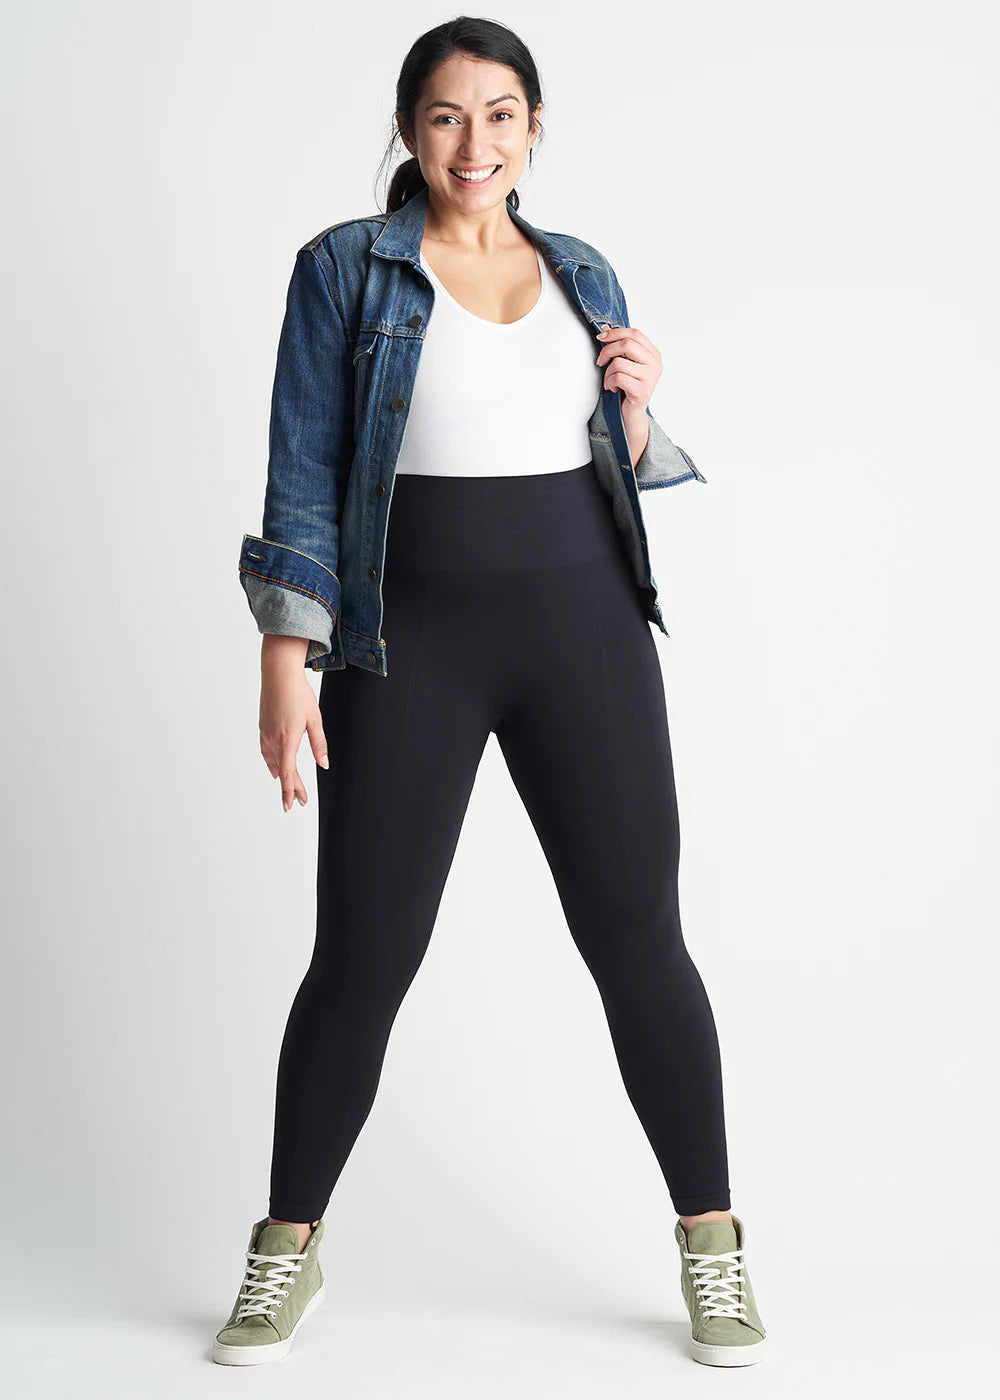 AVIA PLUS SIZE LEGGING  Plus size leggings, Clothes design, Plus size